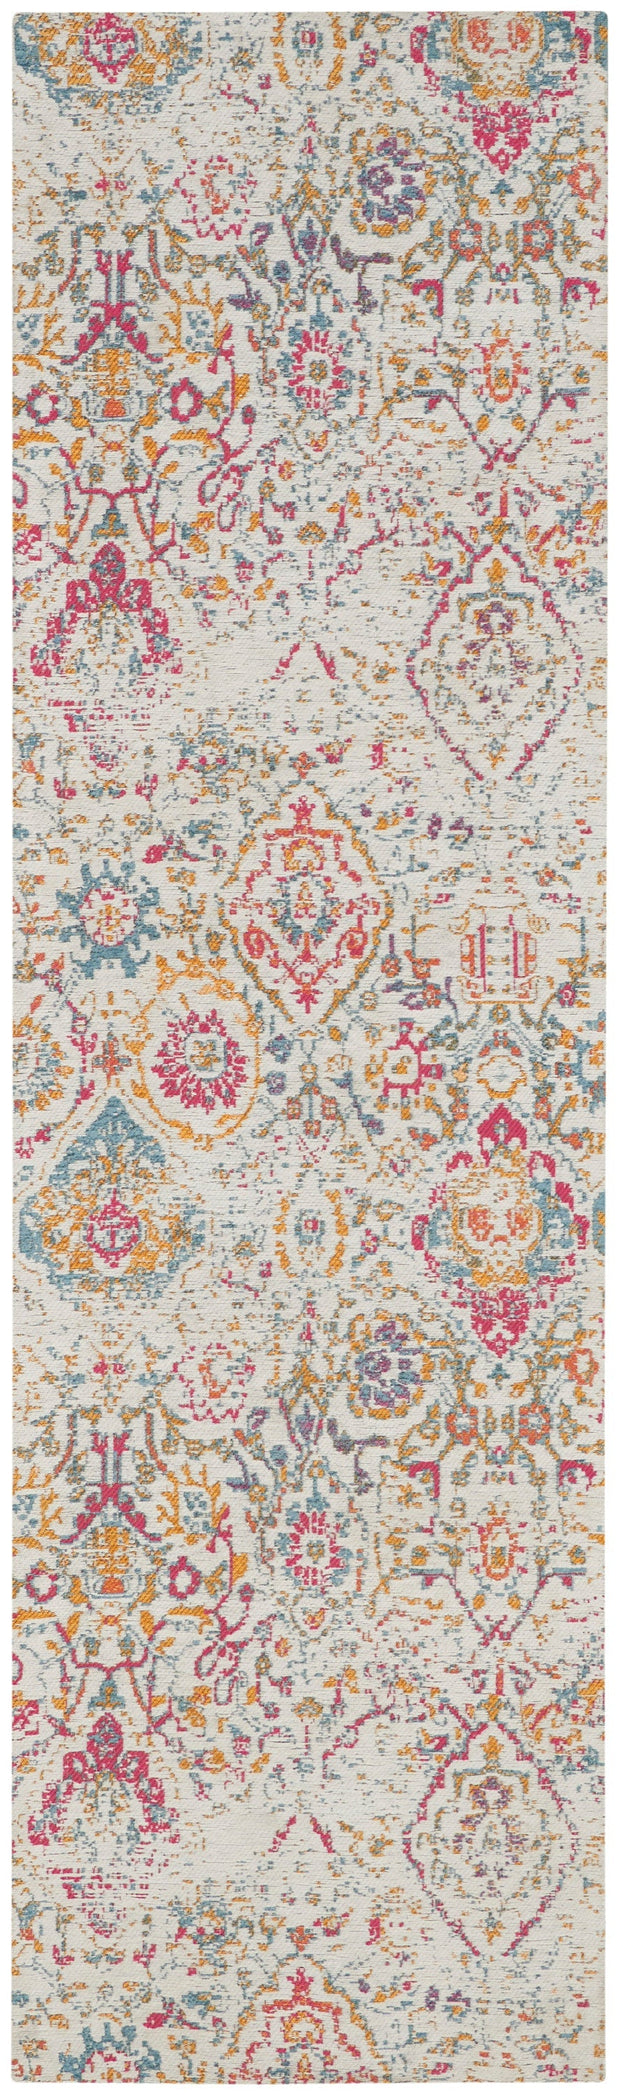 damask multicolor rug by nourison 99446836786 redo 3